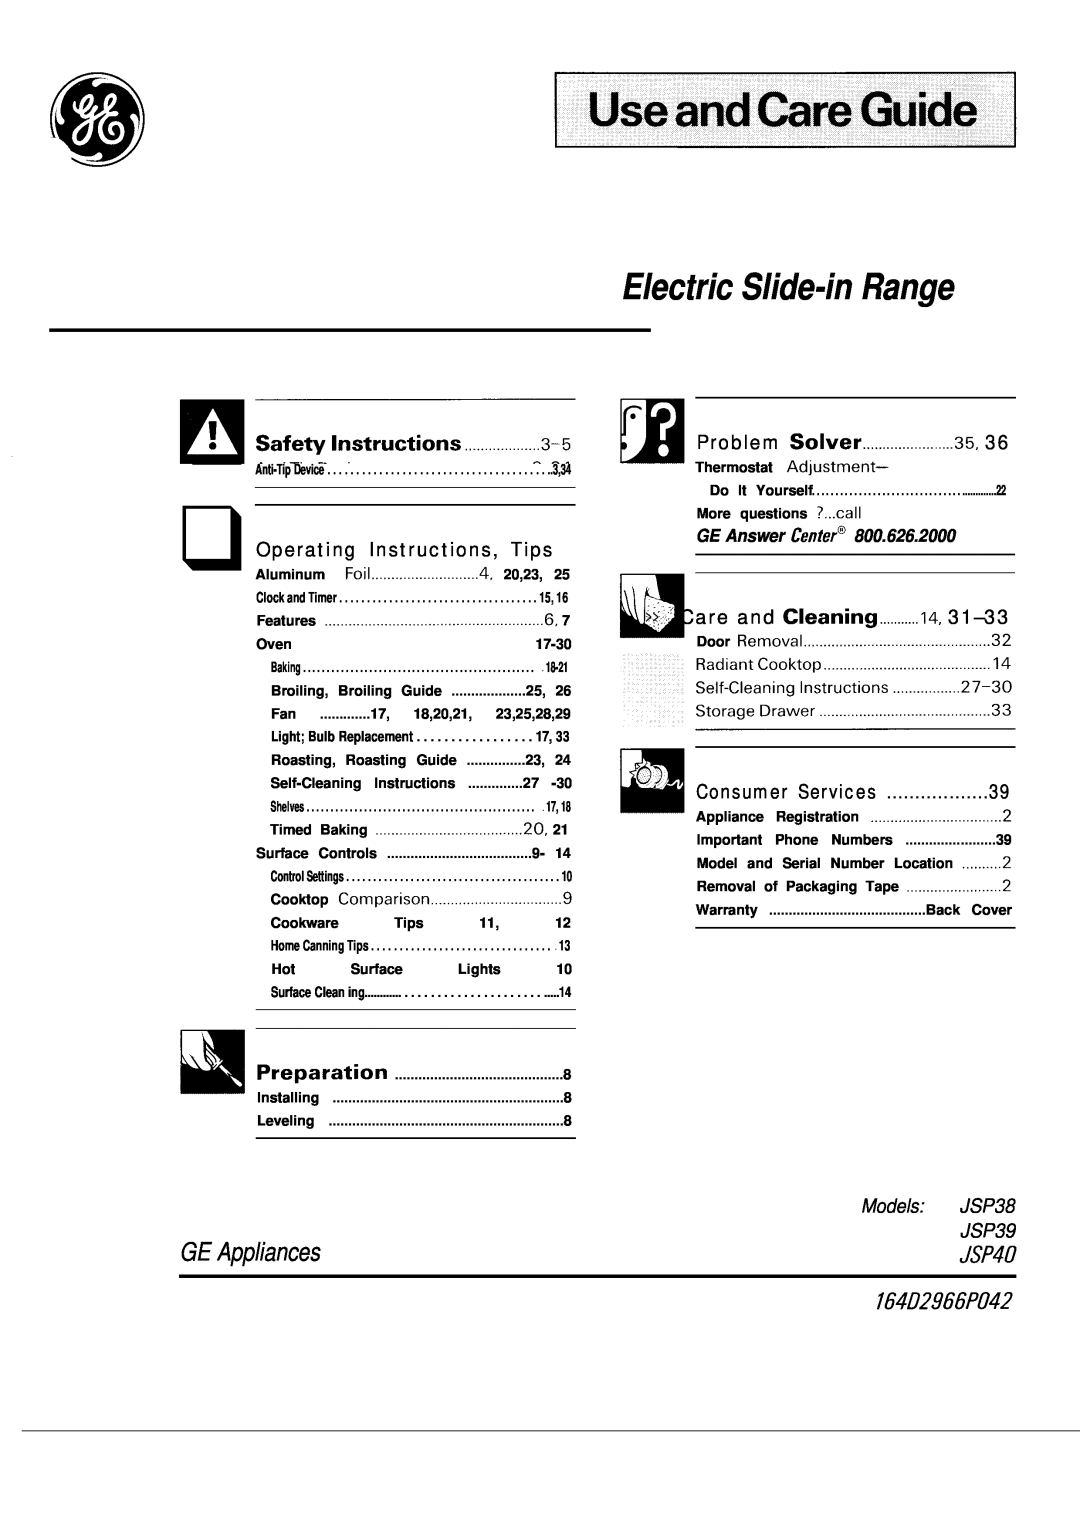 GE JSP38 warranty IiliiH, Electric Slide-in Range, GE Appliances, Operating Instructions, Tips, 14,...l4, 164D2966P042 